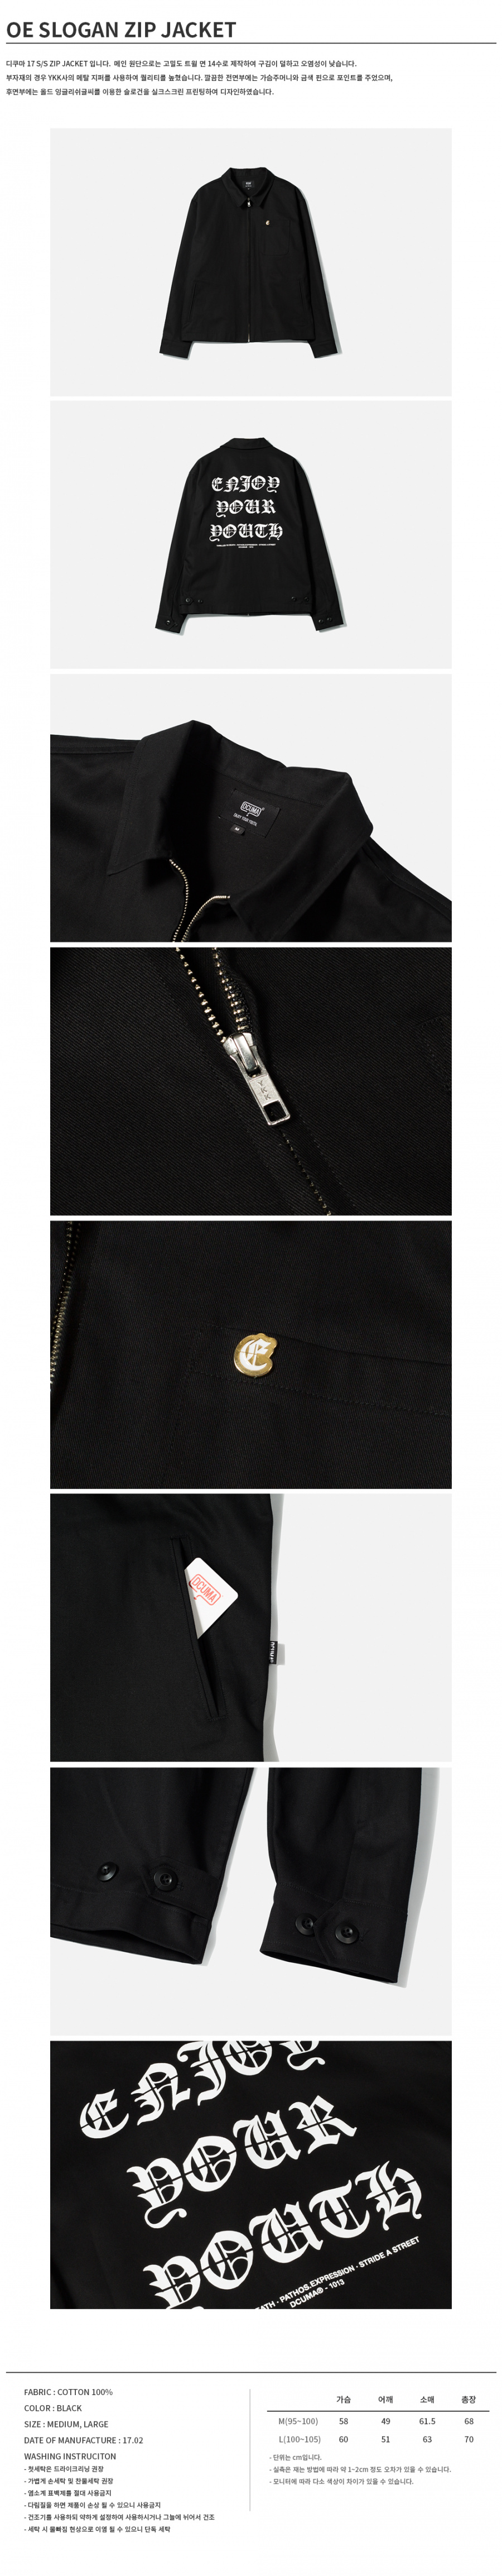 17ss_oe-slogan-zip-jacket_black_detail.jpg